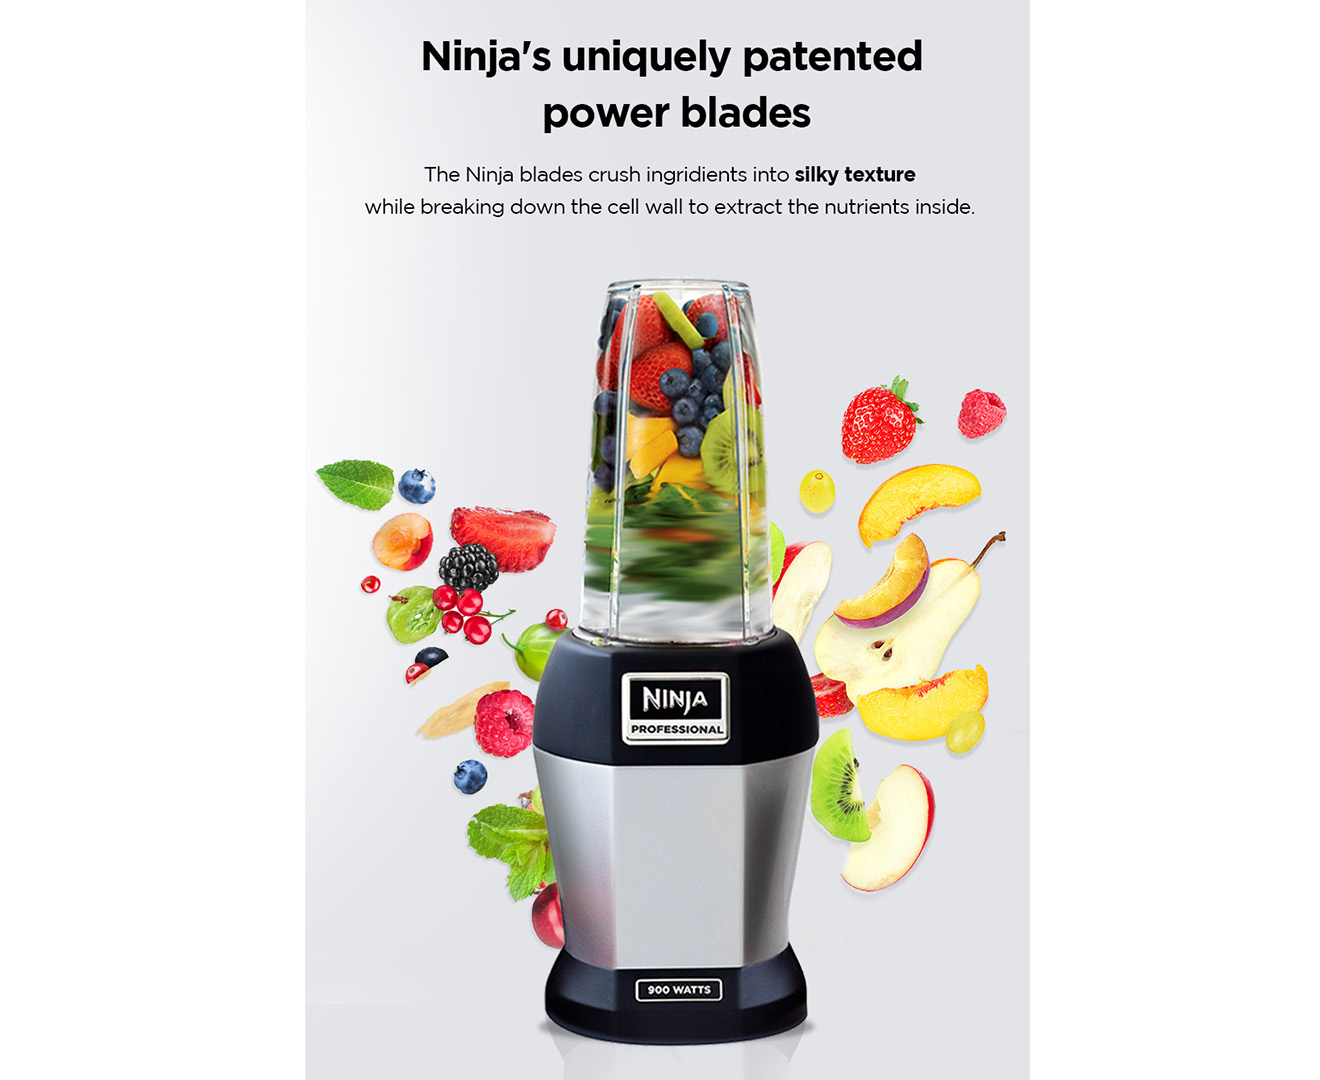 BL450_EGB Nutri Ninja Pro 900 Watt Blender - Most Powerful